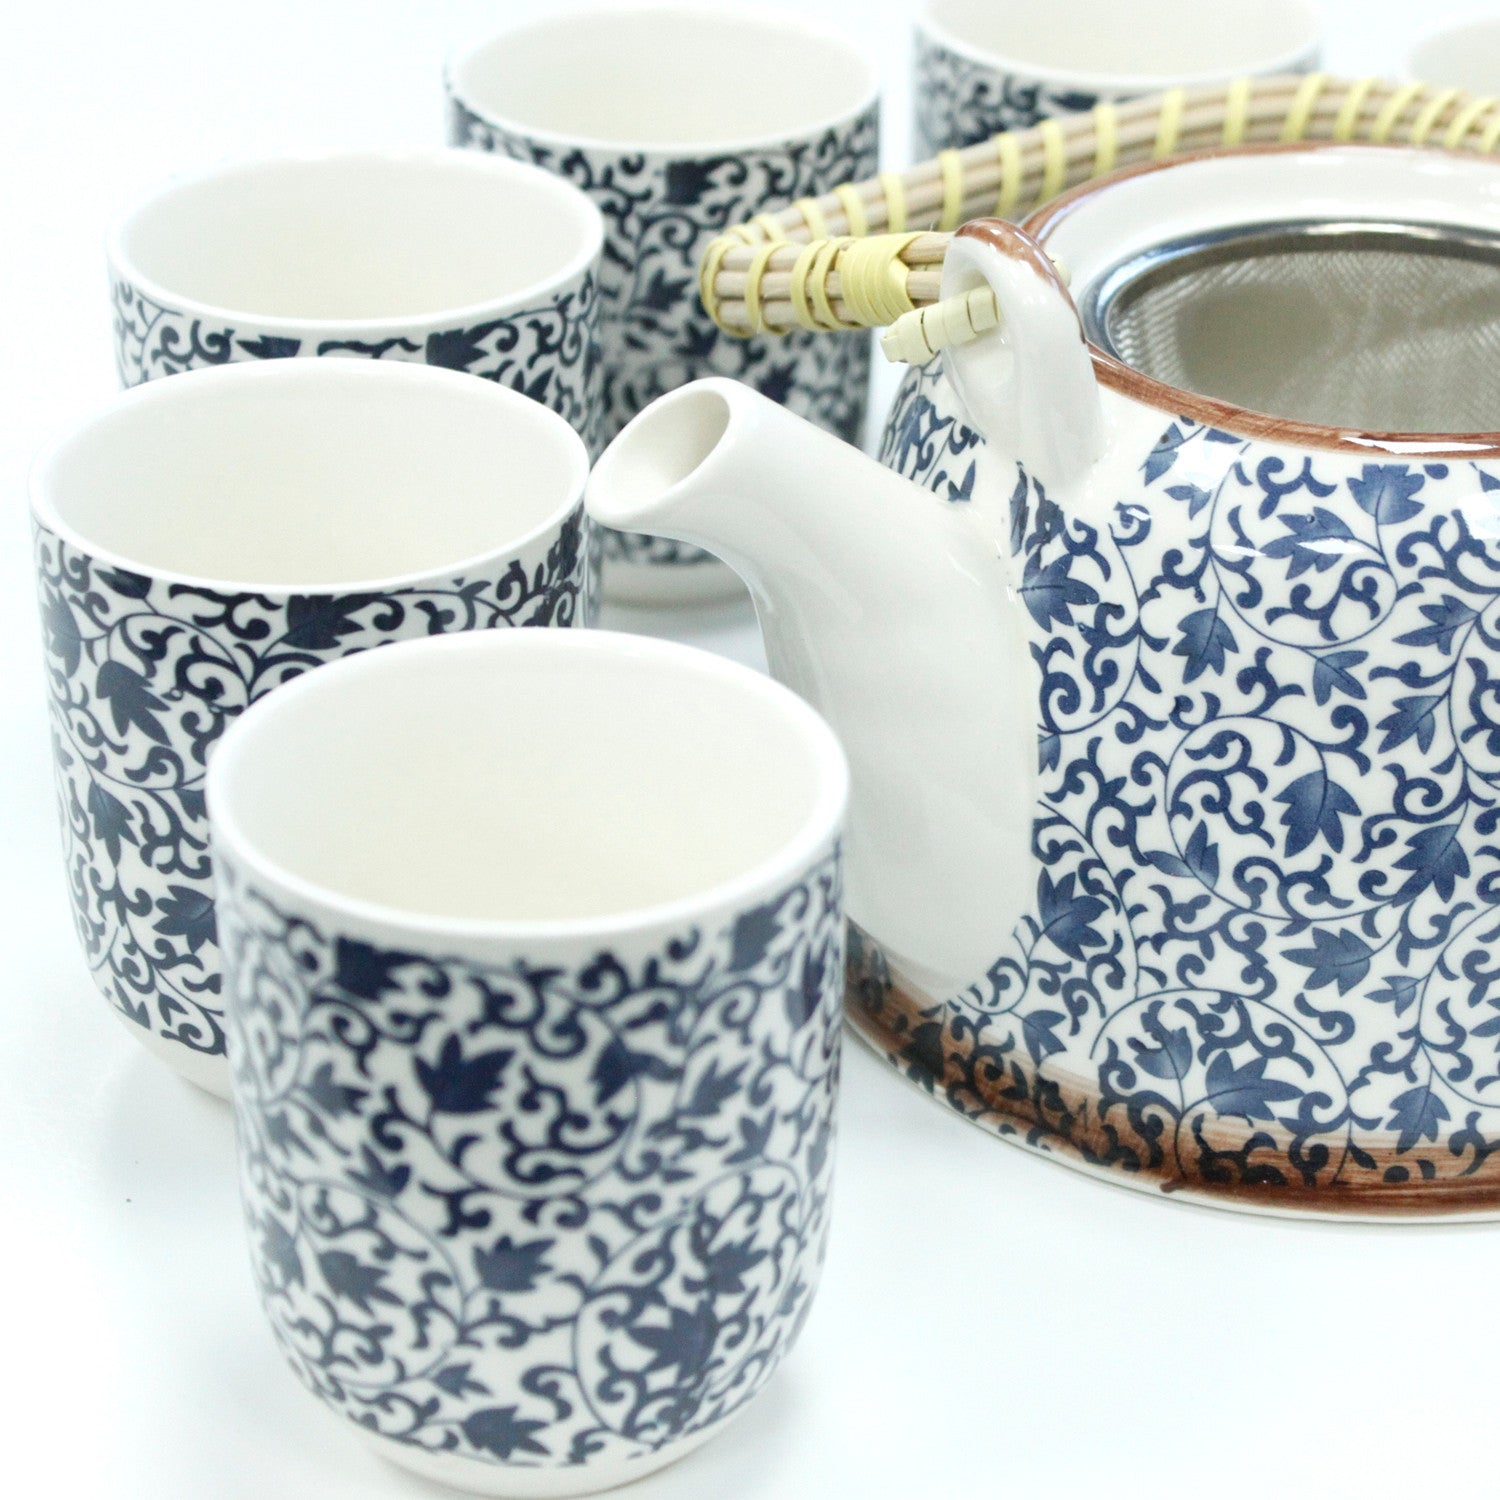 Tee-Set "Mosaic" Grün oder Blau Keramik - www.tealove24.de